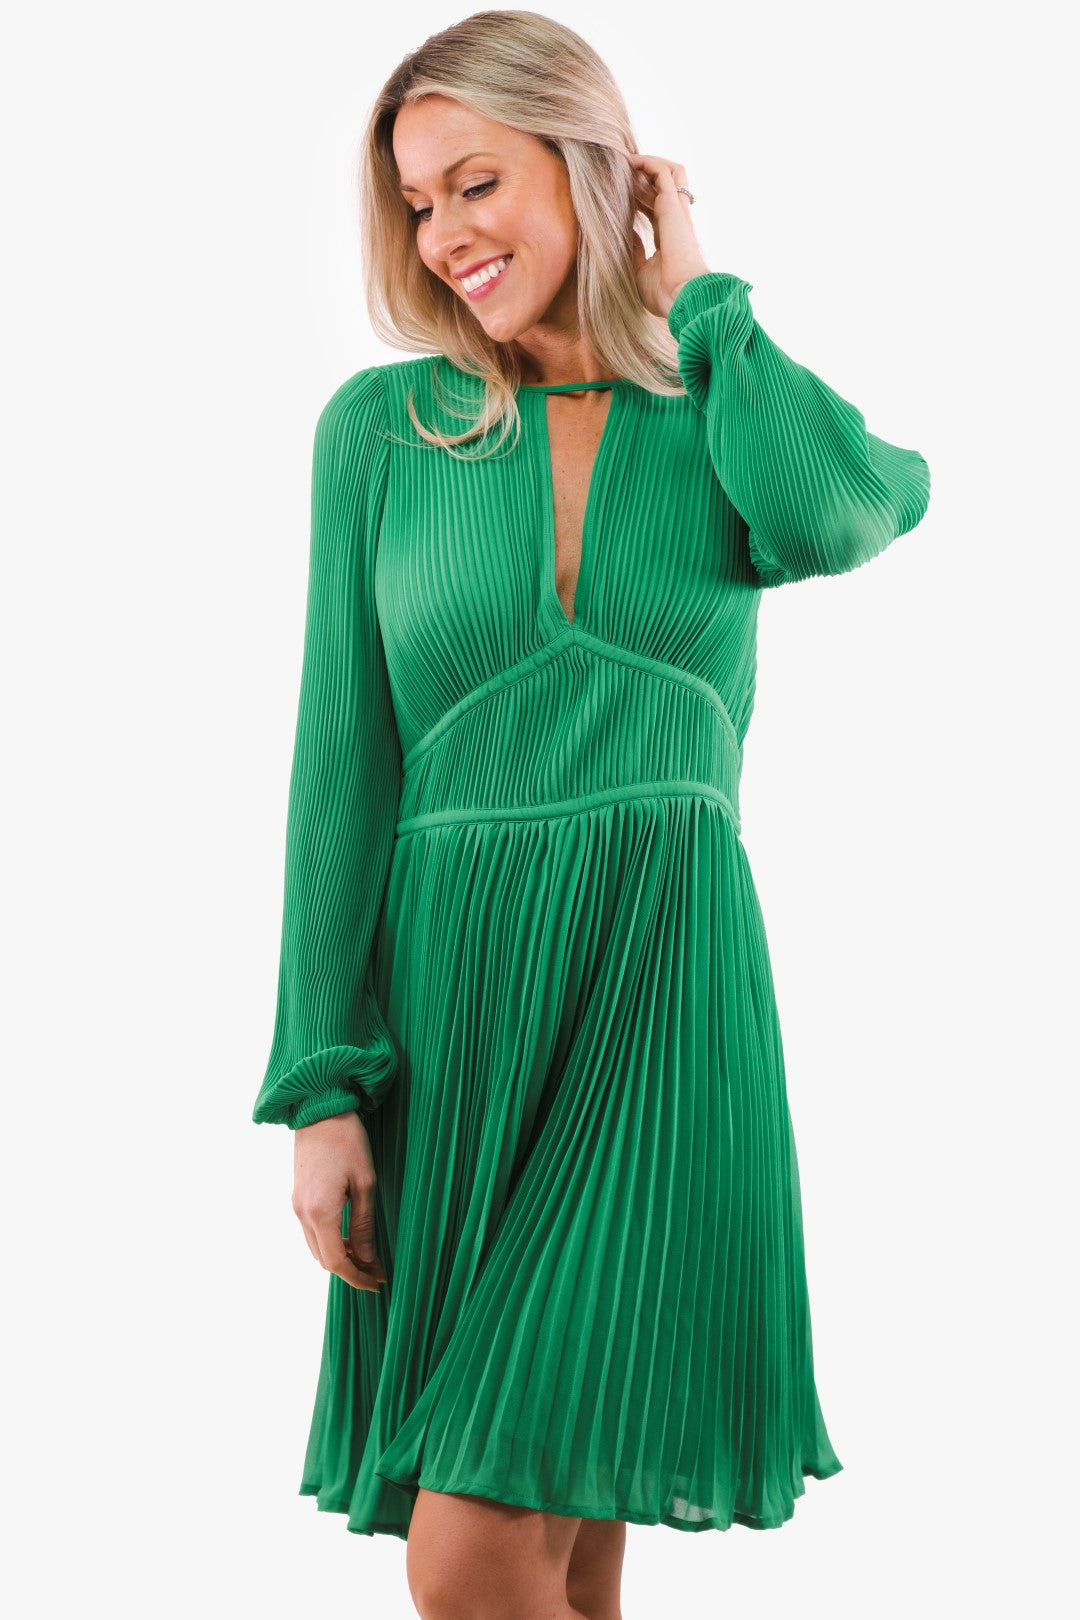 Boutique Option-Michael Kors Green Dress(Kors-Mr381In7R3-311)